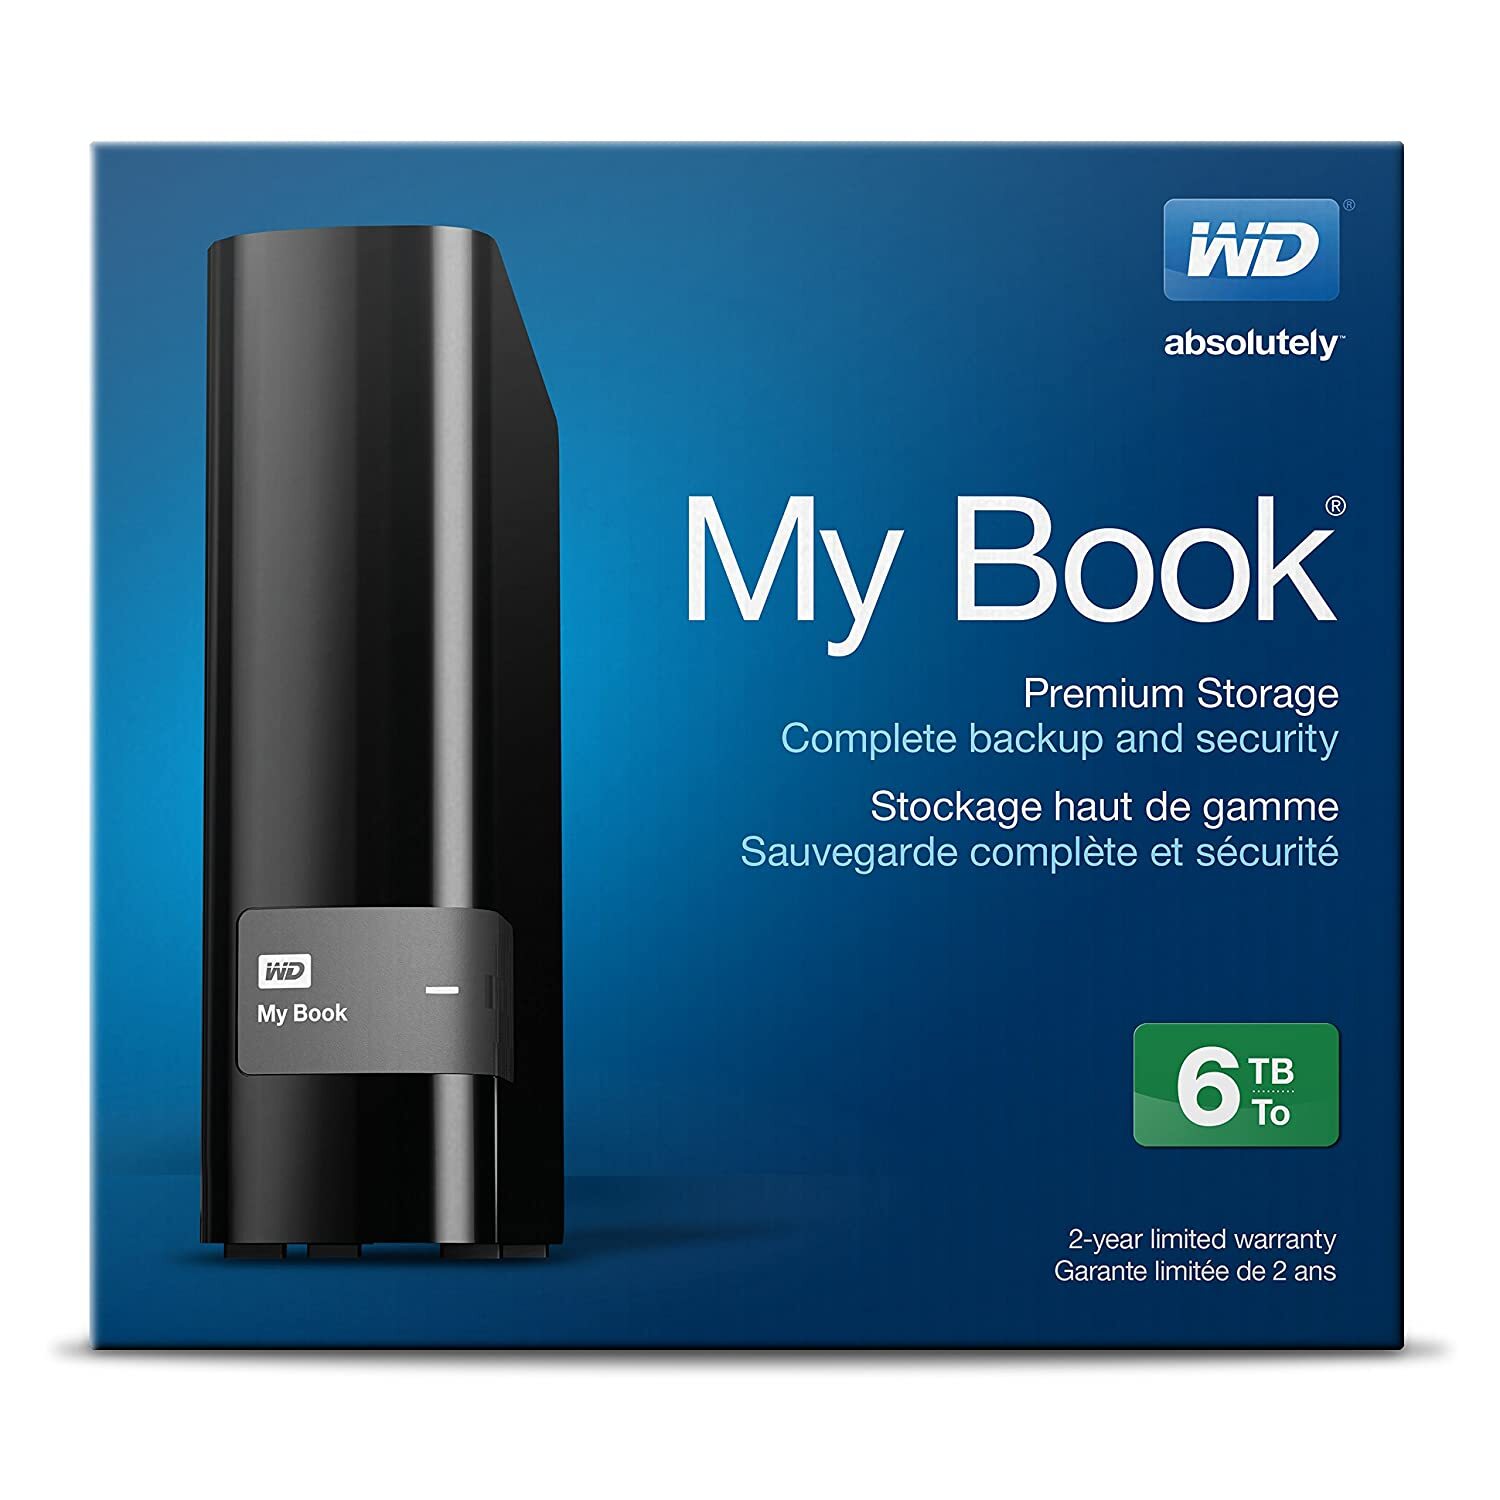 WD My Book 6TB External Hard Drive Storage USB 3.0 File Backup and Storage